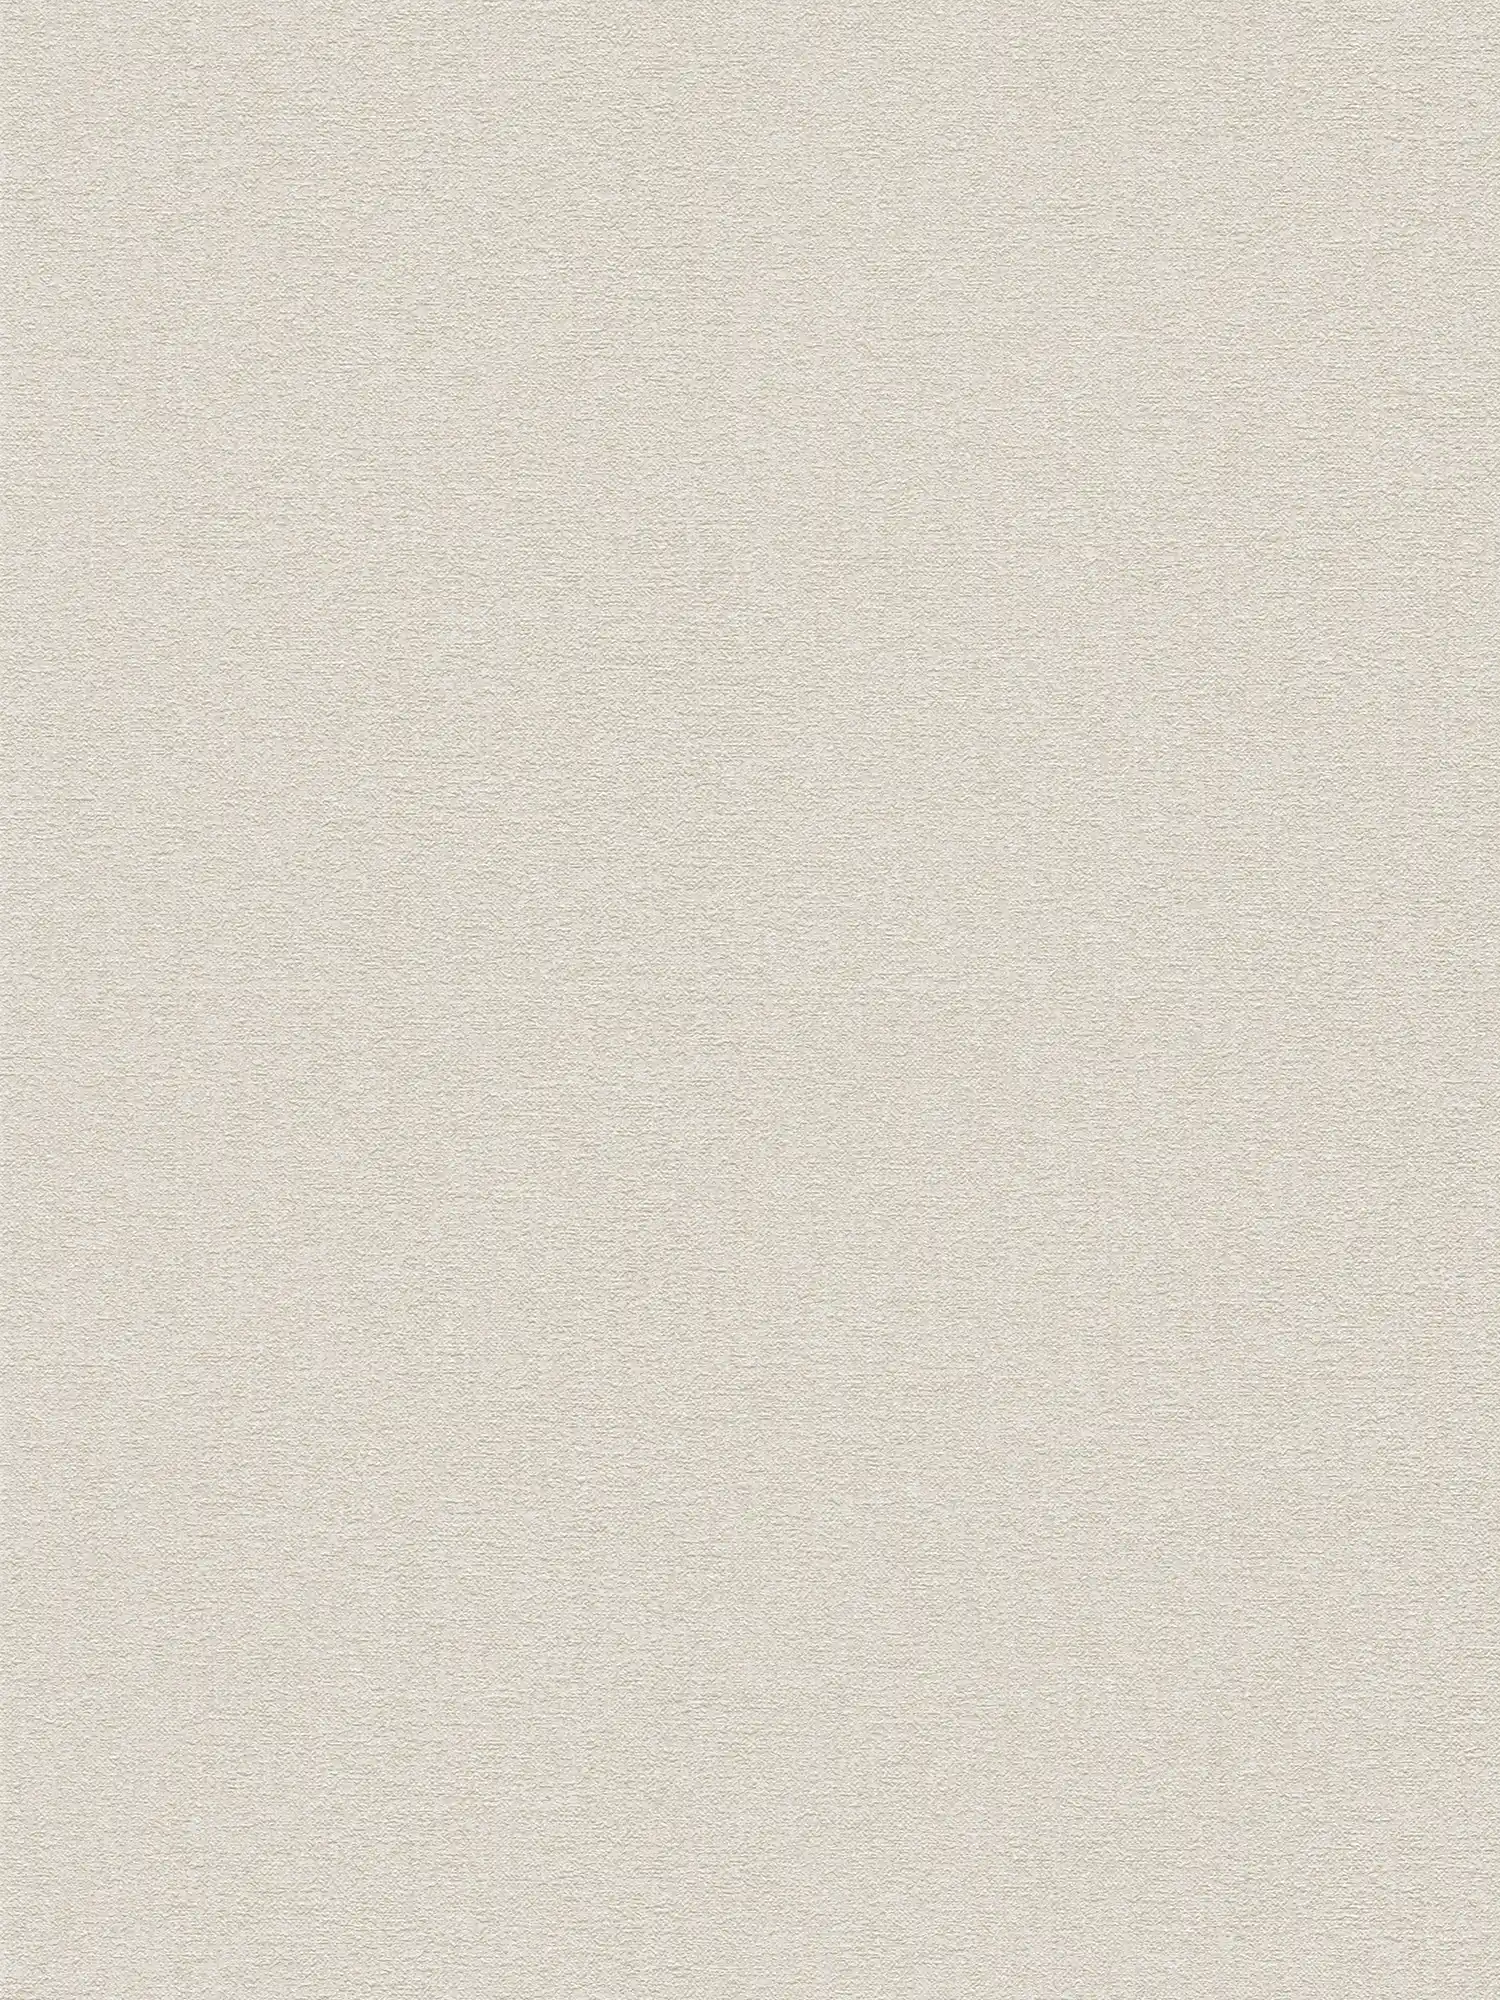 Plain wallpaper with plain textured pattern - beige, cream
